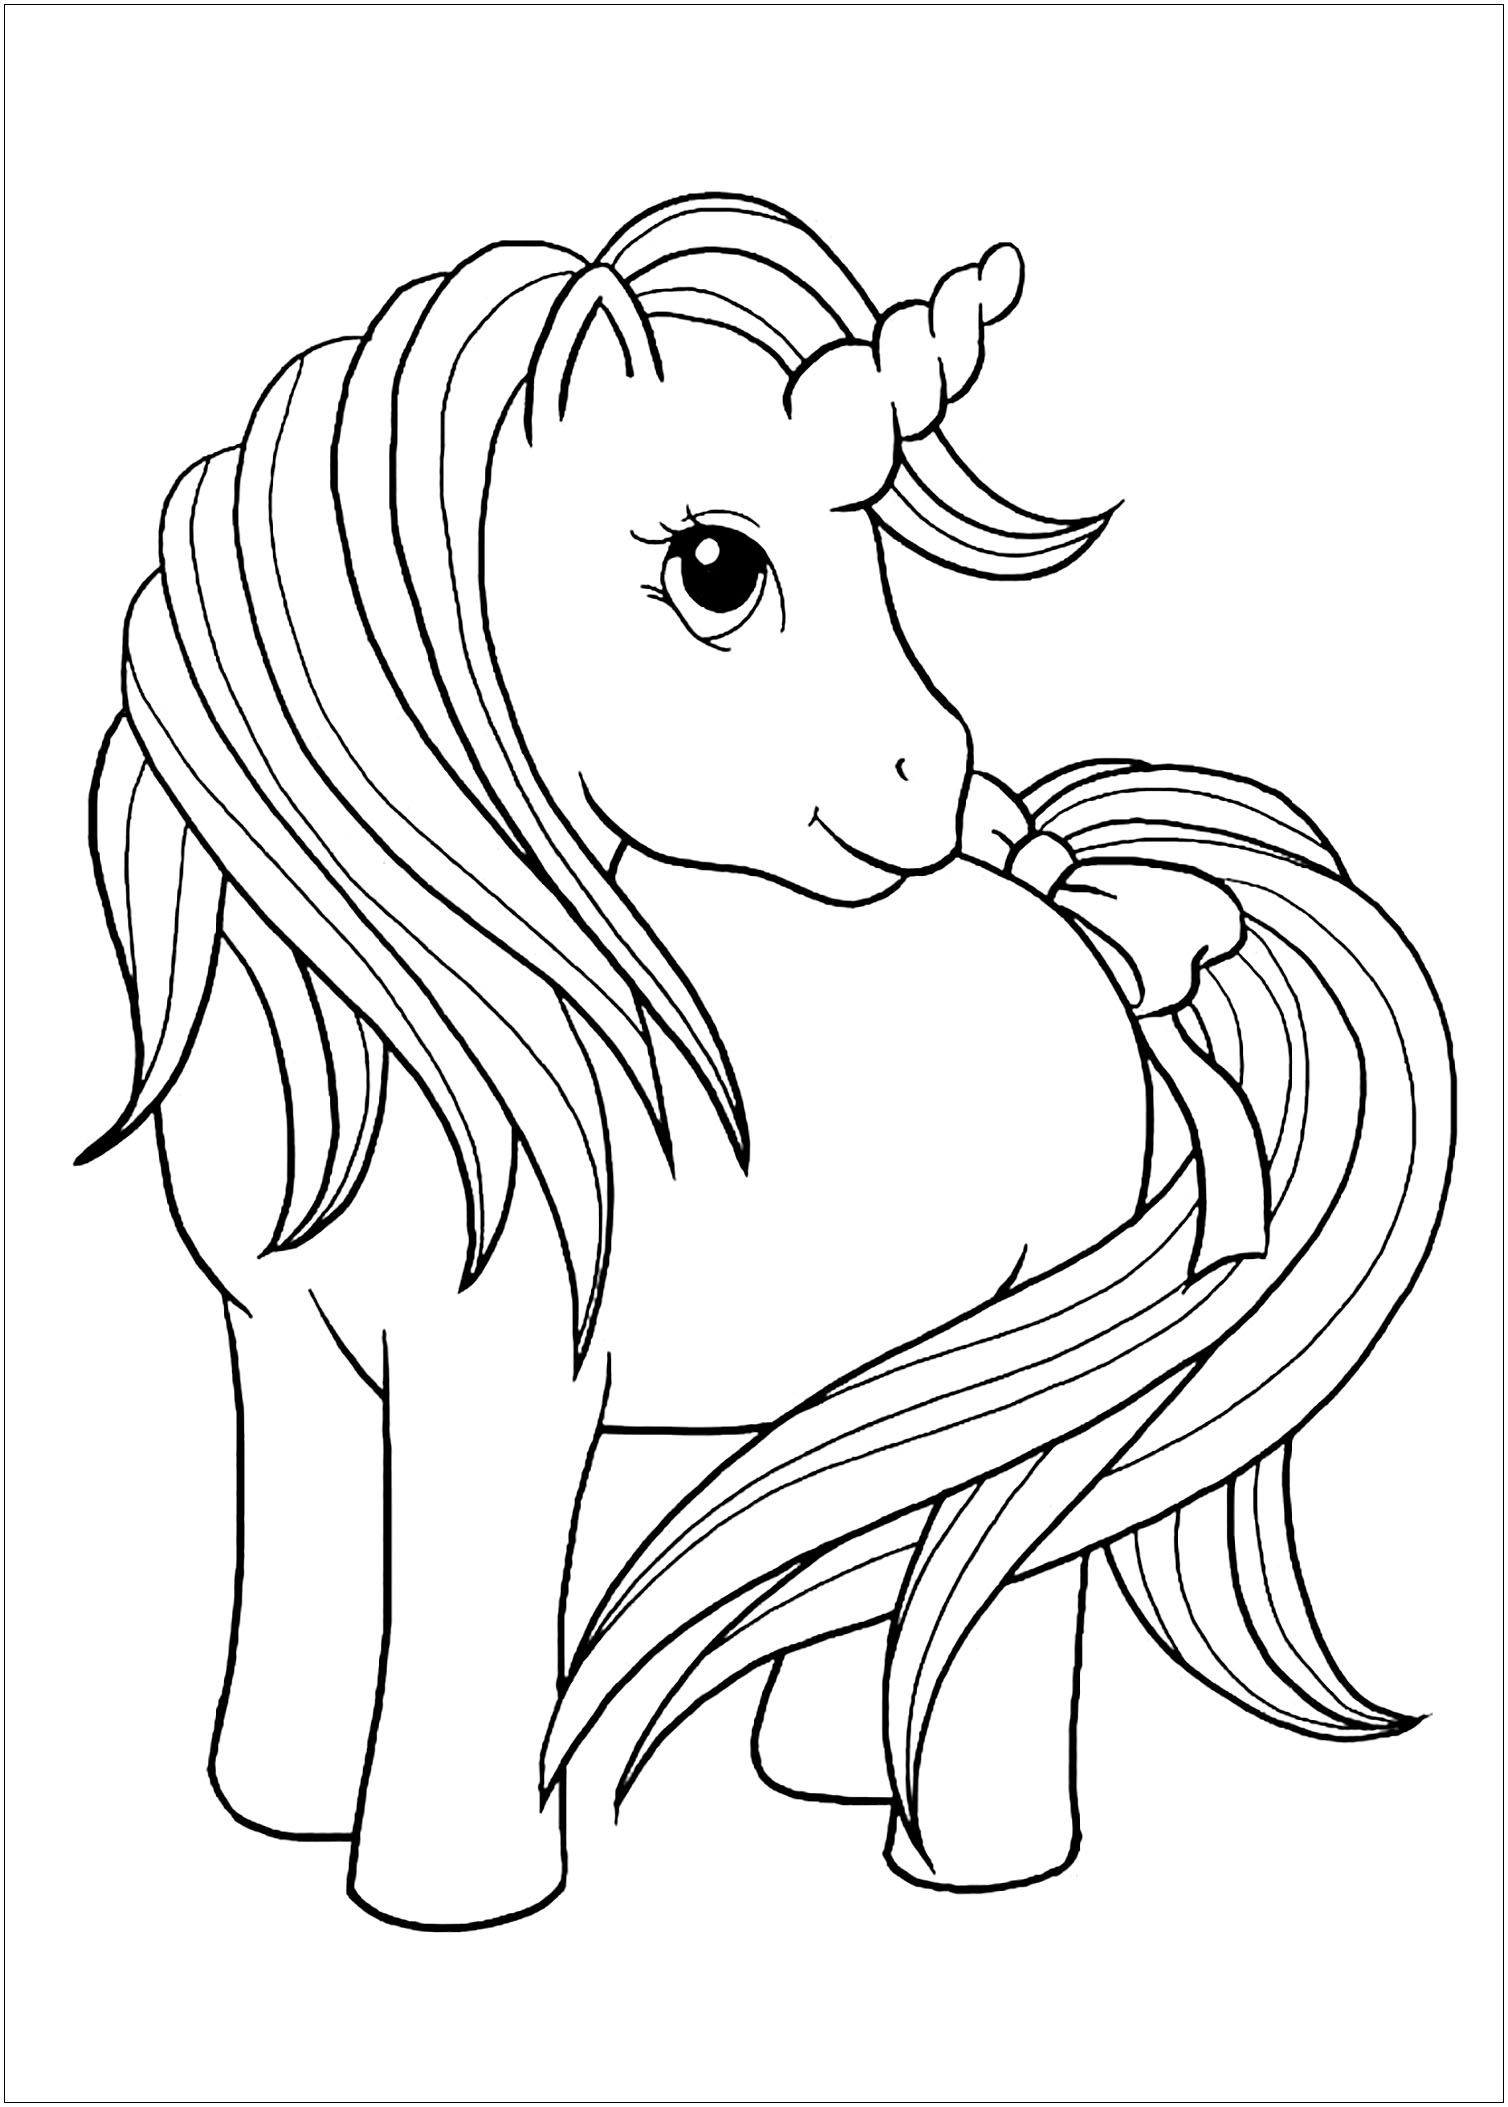 Download Unicorns free to color for children - Unicorns Kids ...